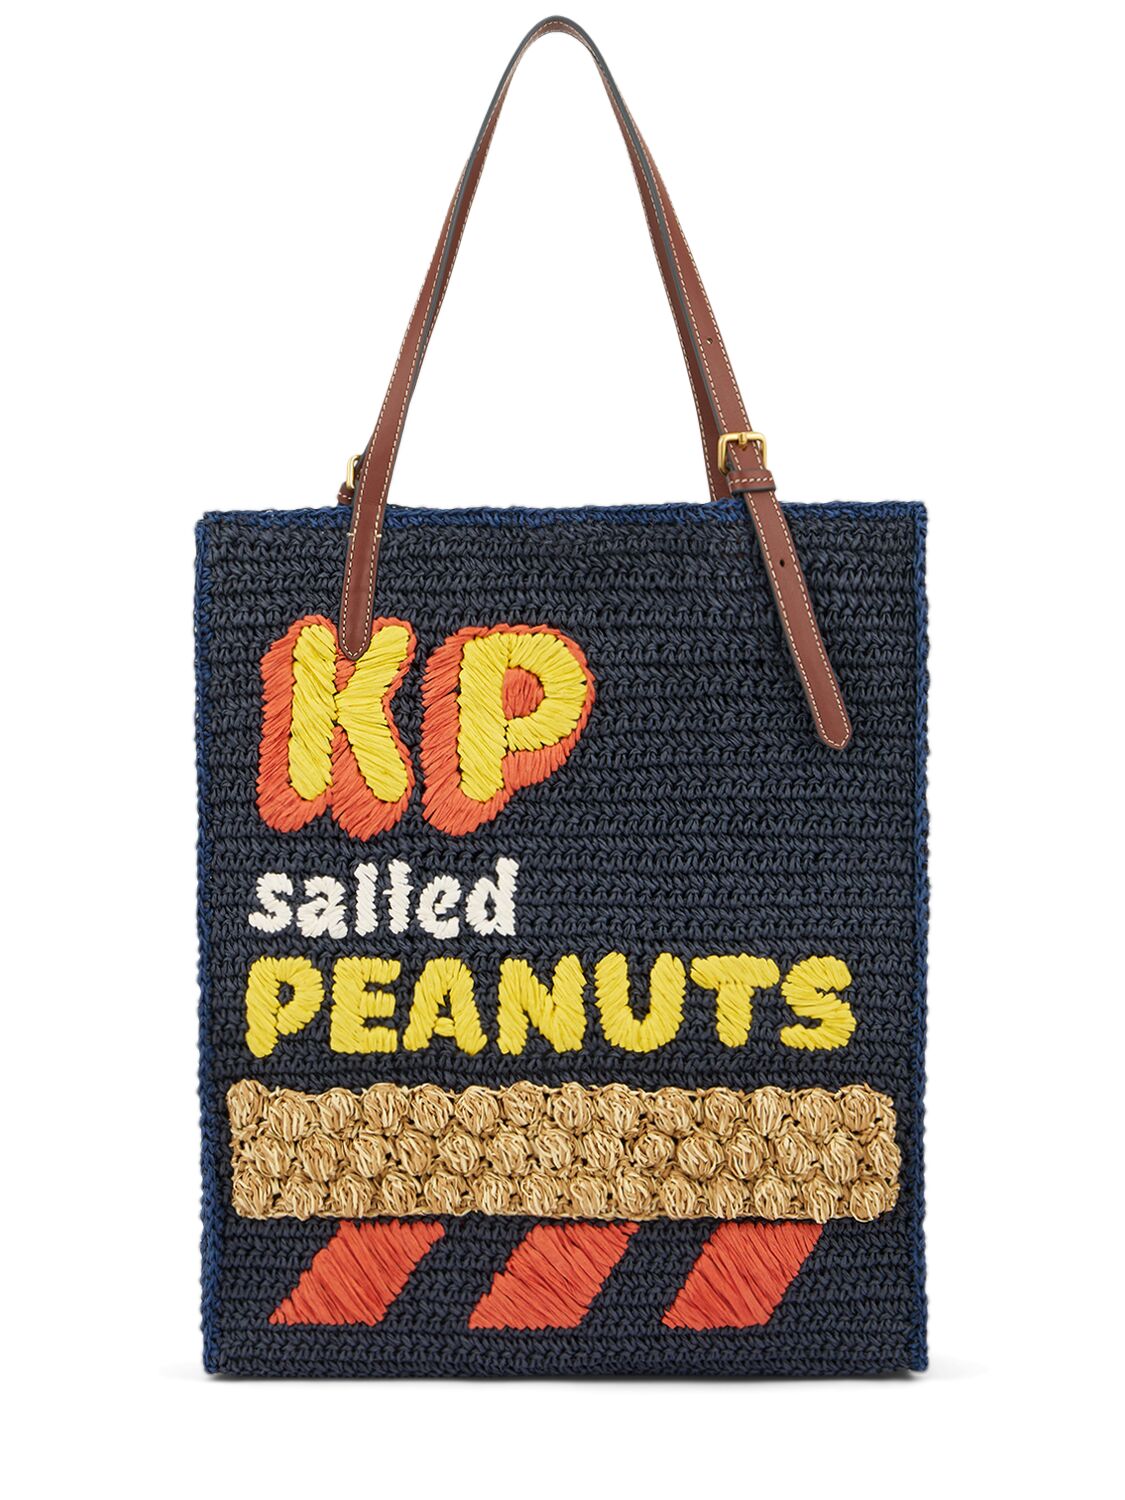 Image of Kp Peanuts Raffia Tote Bag